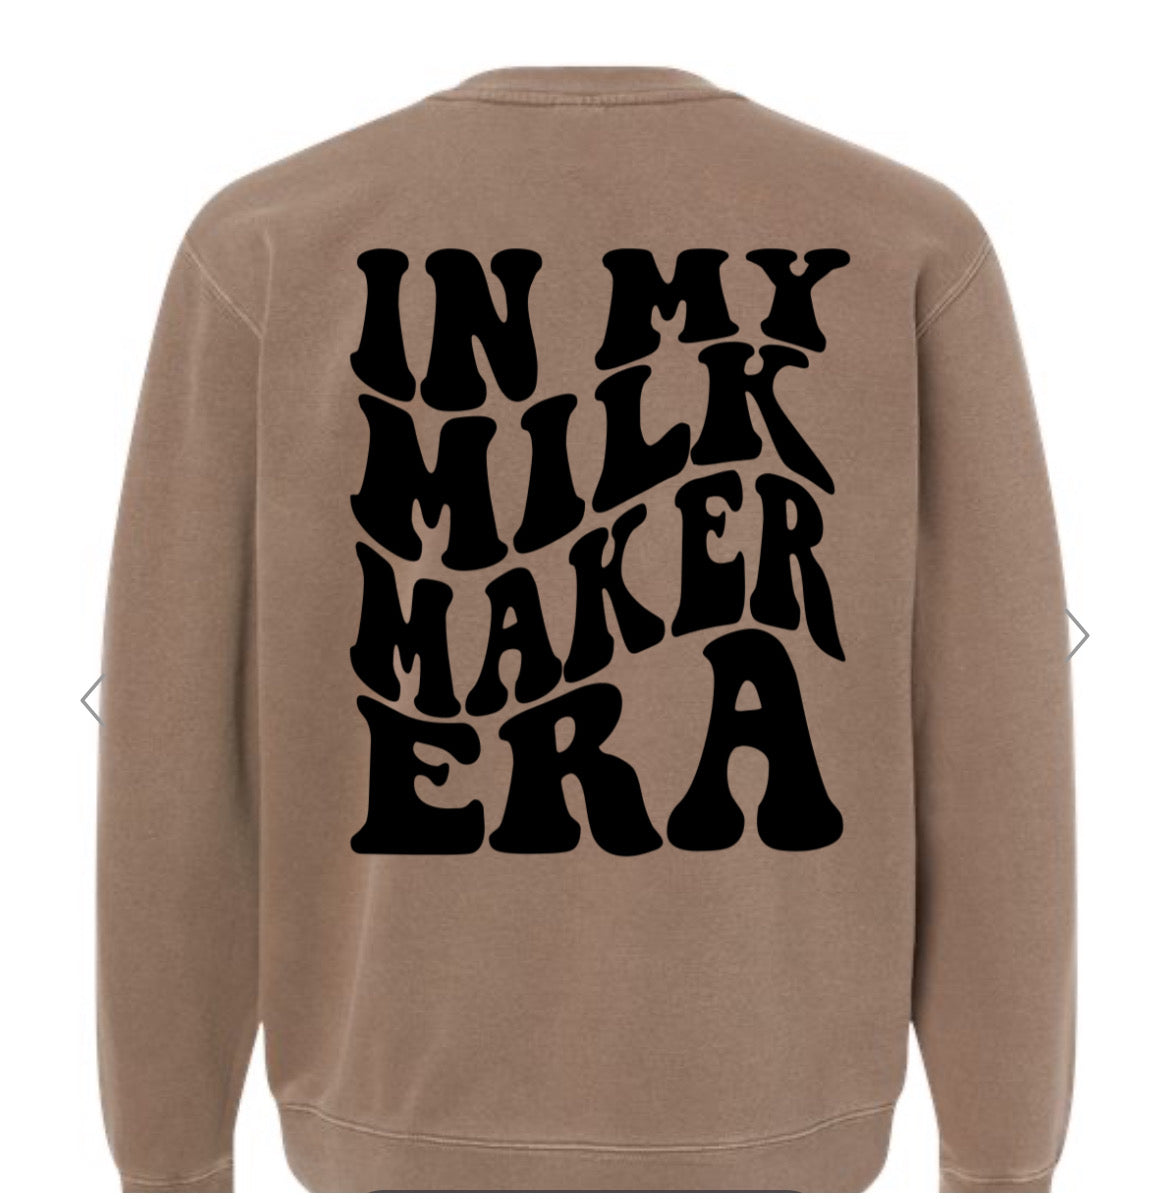 In my milk maker era